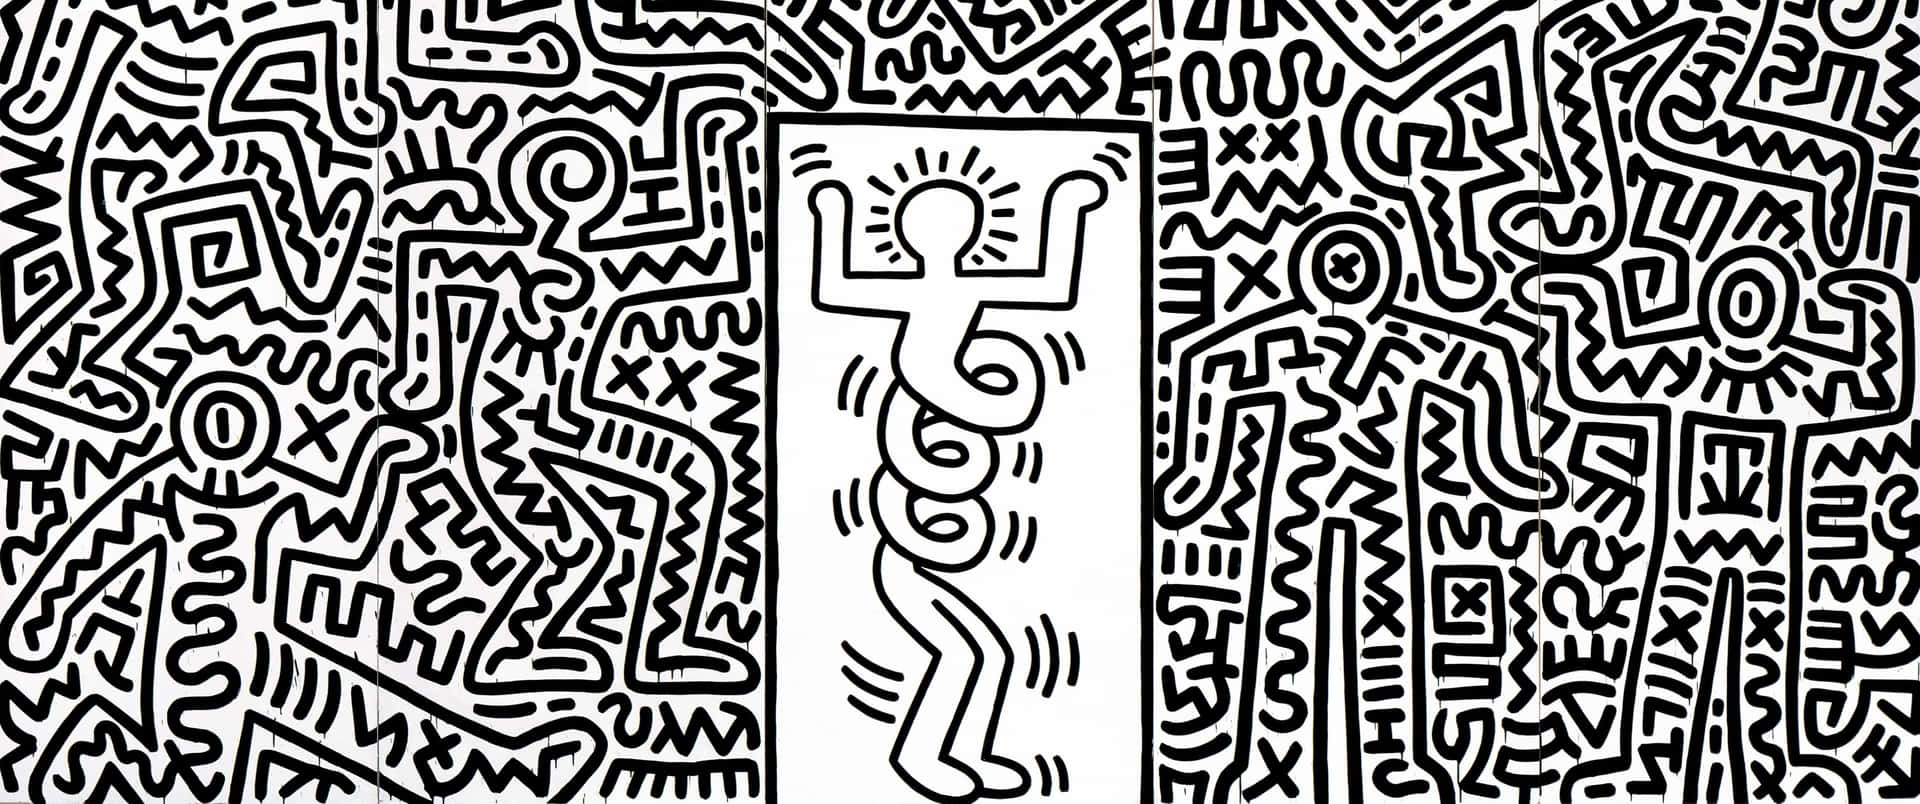 Keith Haring Inspired Figuresand Patterns Wallpaper